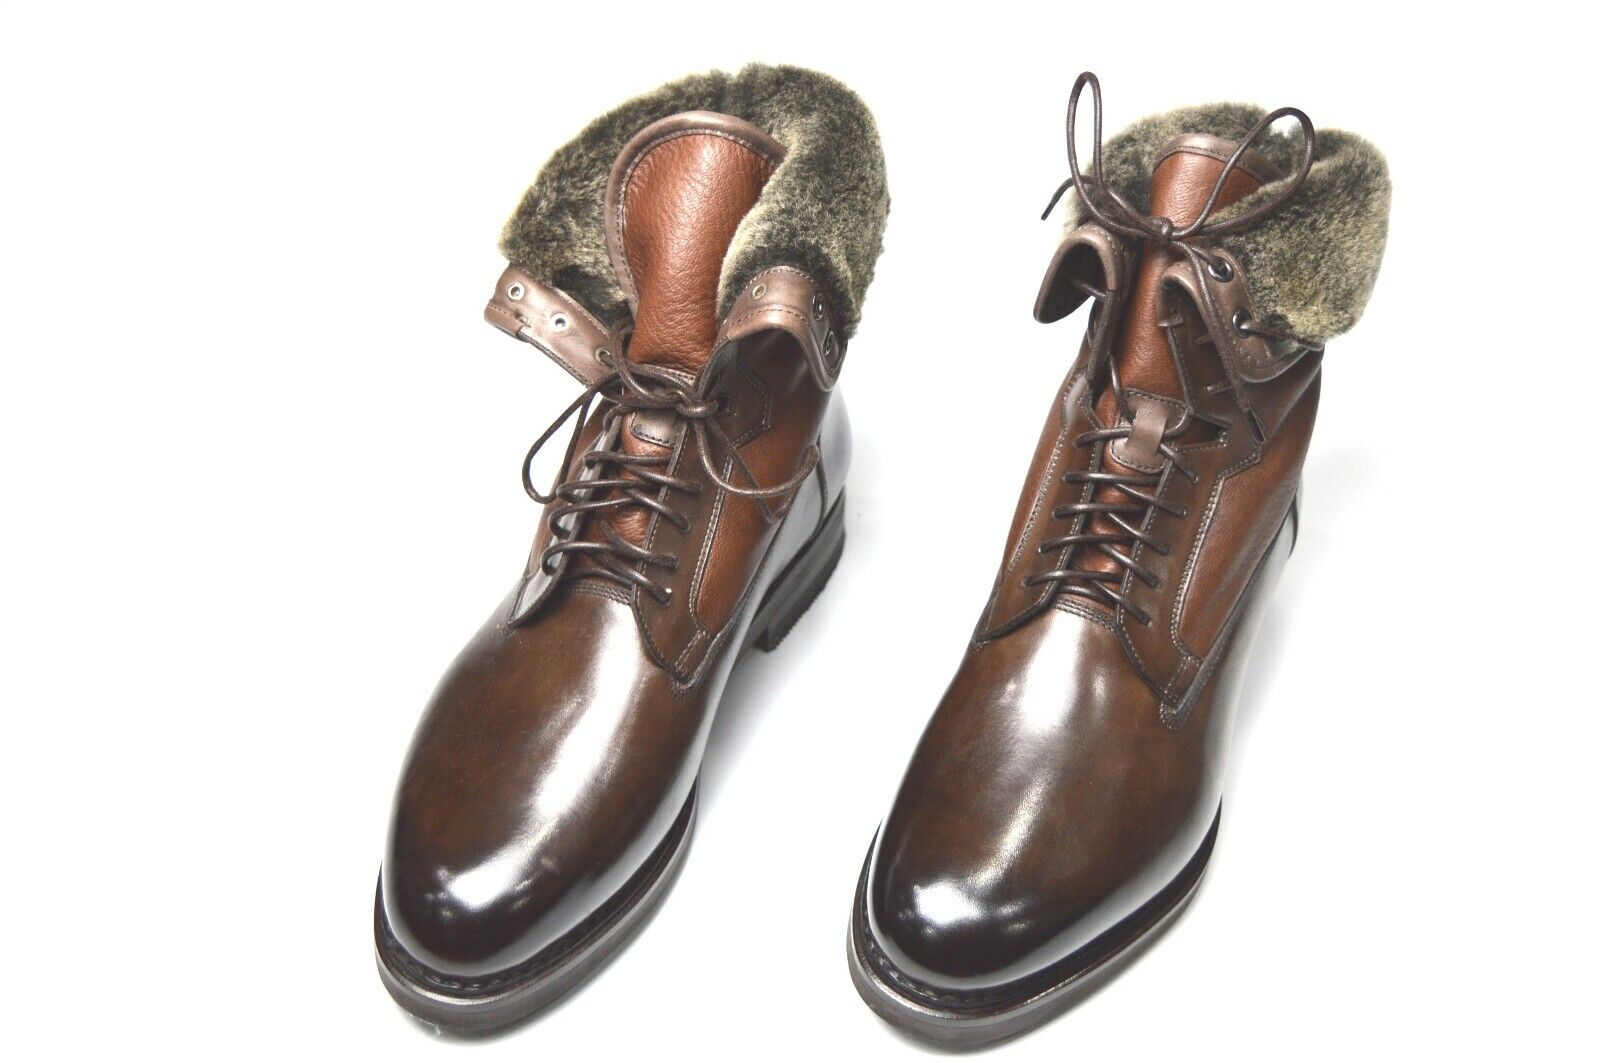 NEW SANTONI Boots Fur LIMITED EDITION Shoes Size Eu 39.5 Uk 5.5 Us 6.5  (Led106